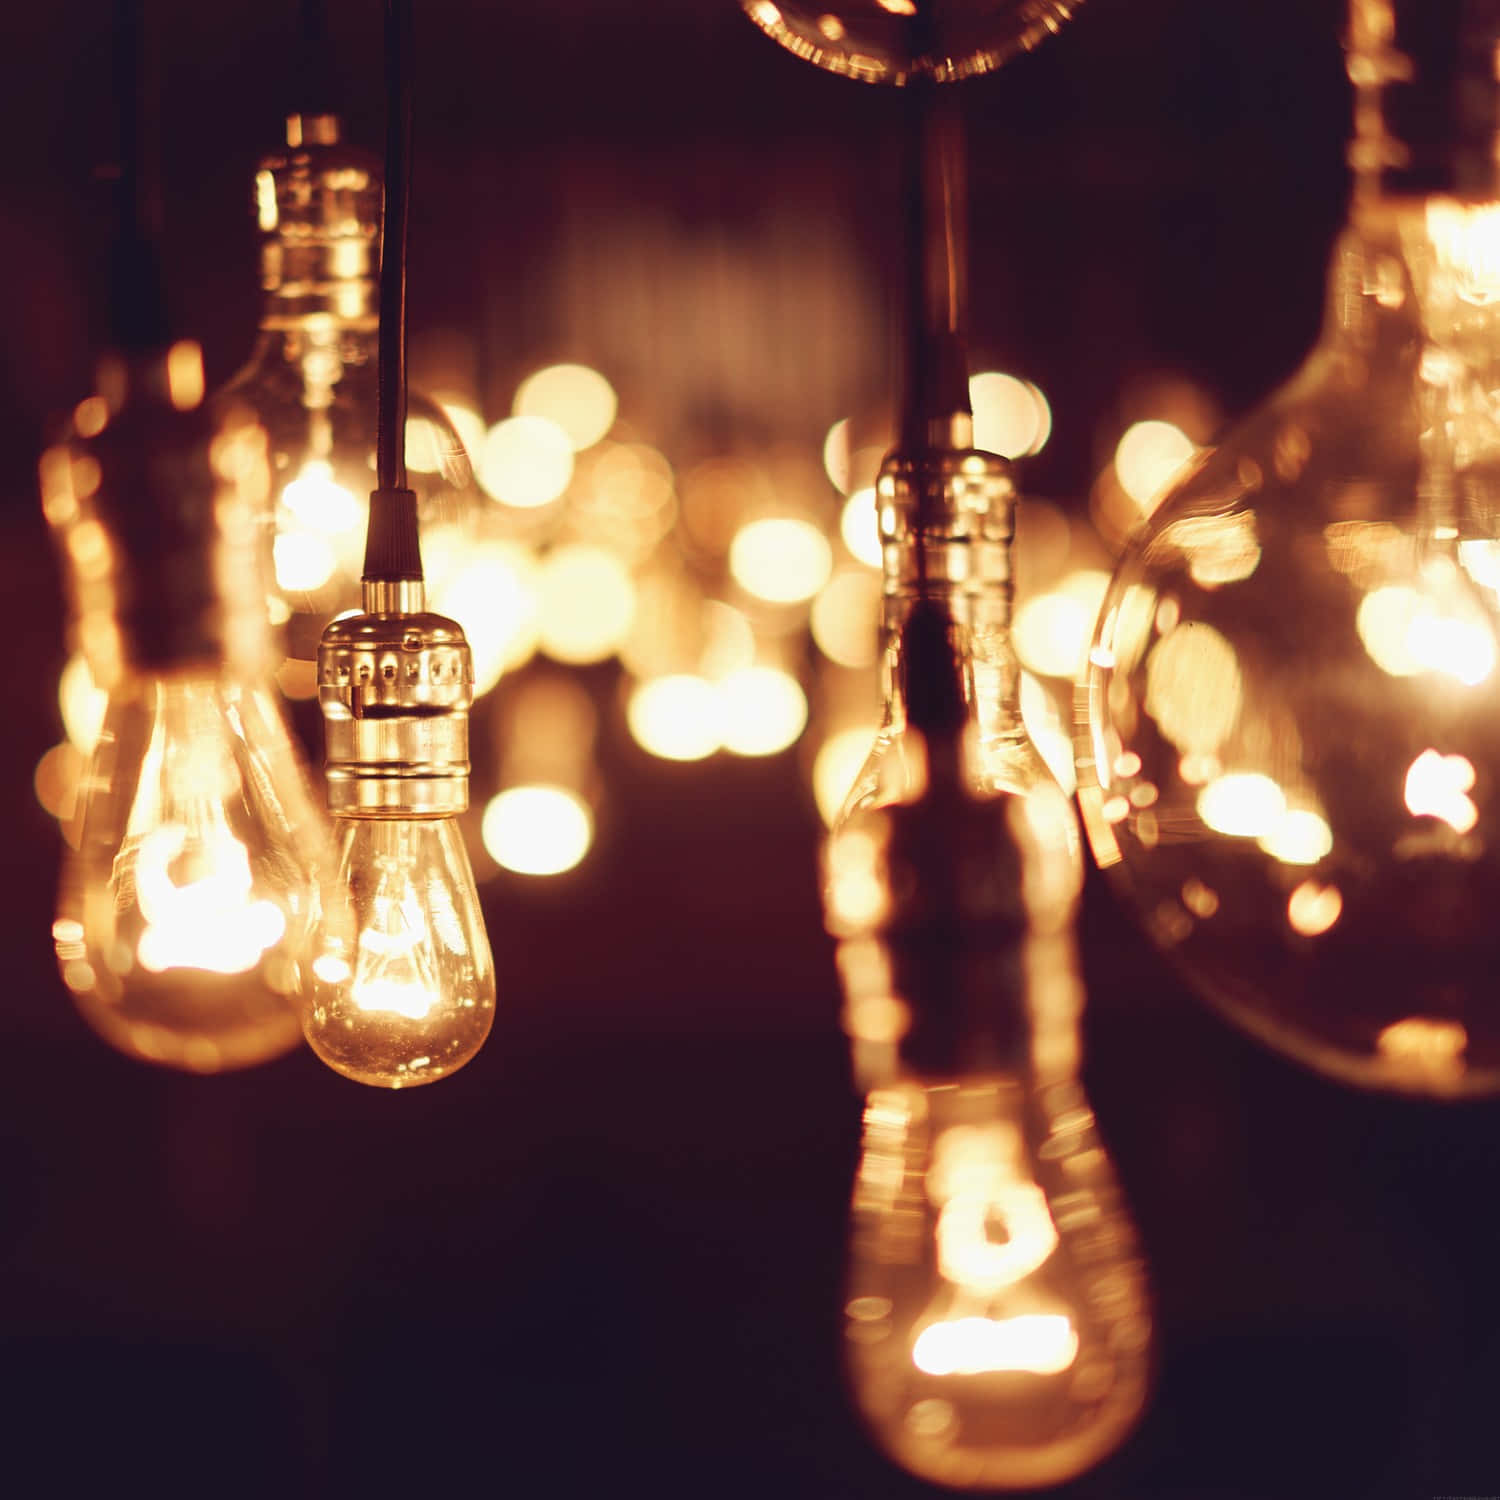 Download Glowing Incandescent Light Bulbs Wallpaper | Wallpapers.com